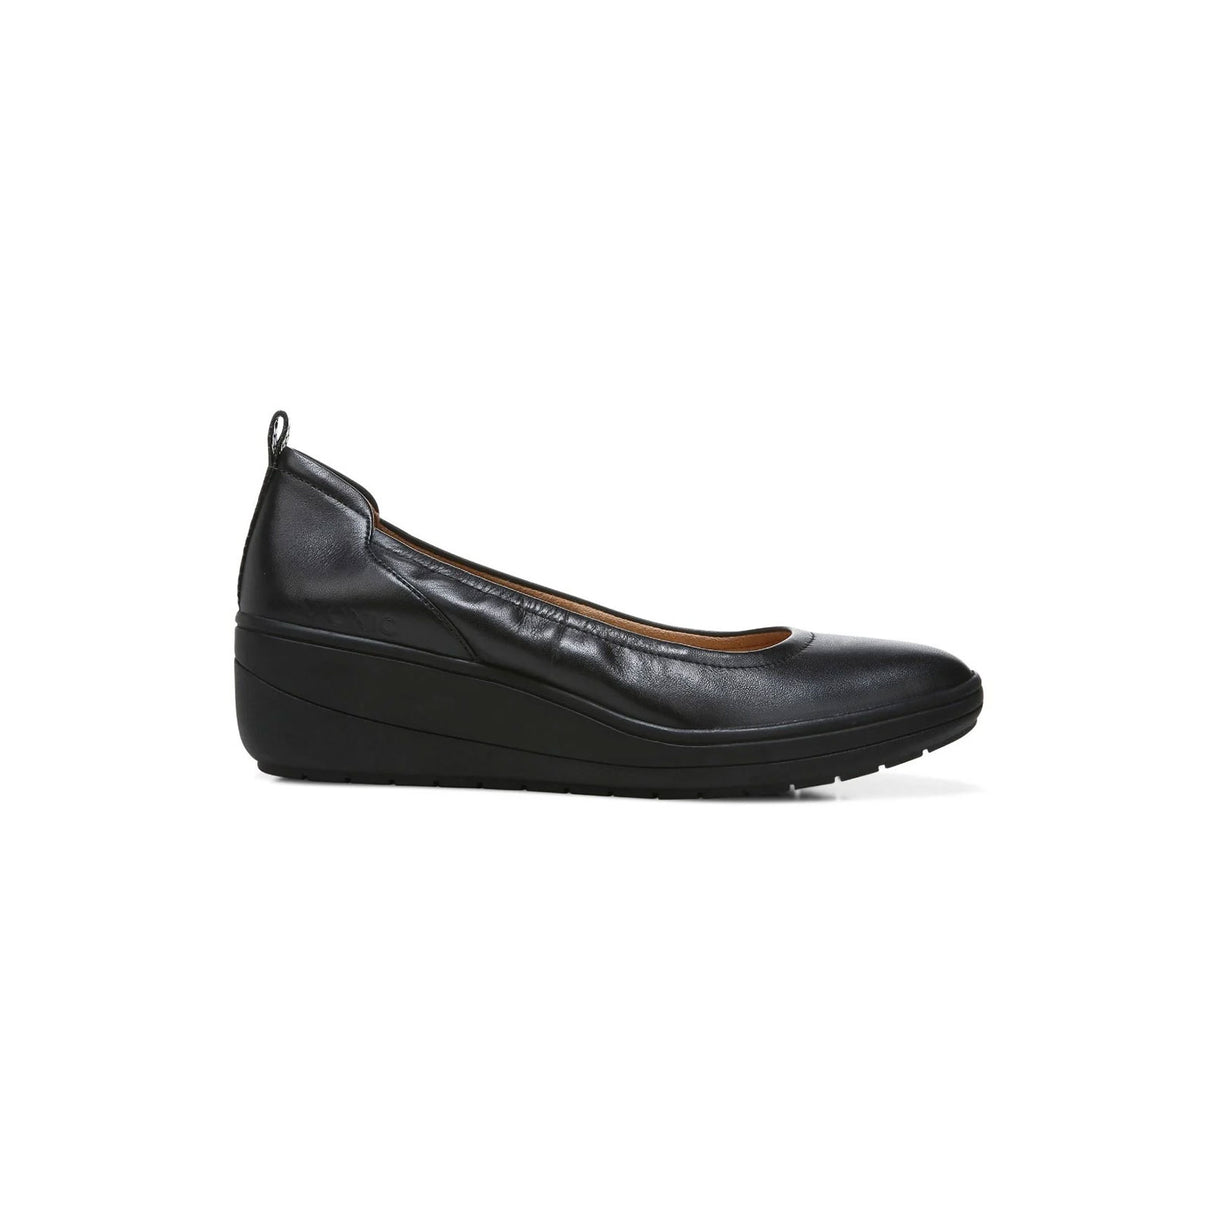 Vionic Jacey Slip On Wedge (Women) - Black/Black Leather  - The Heel Shoe Fitters